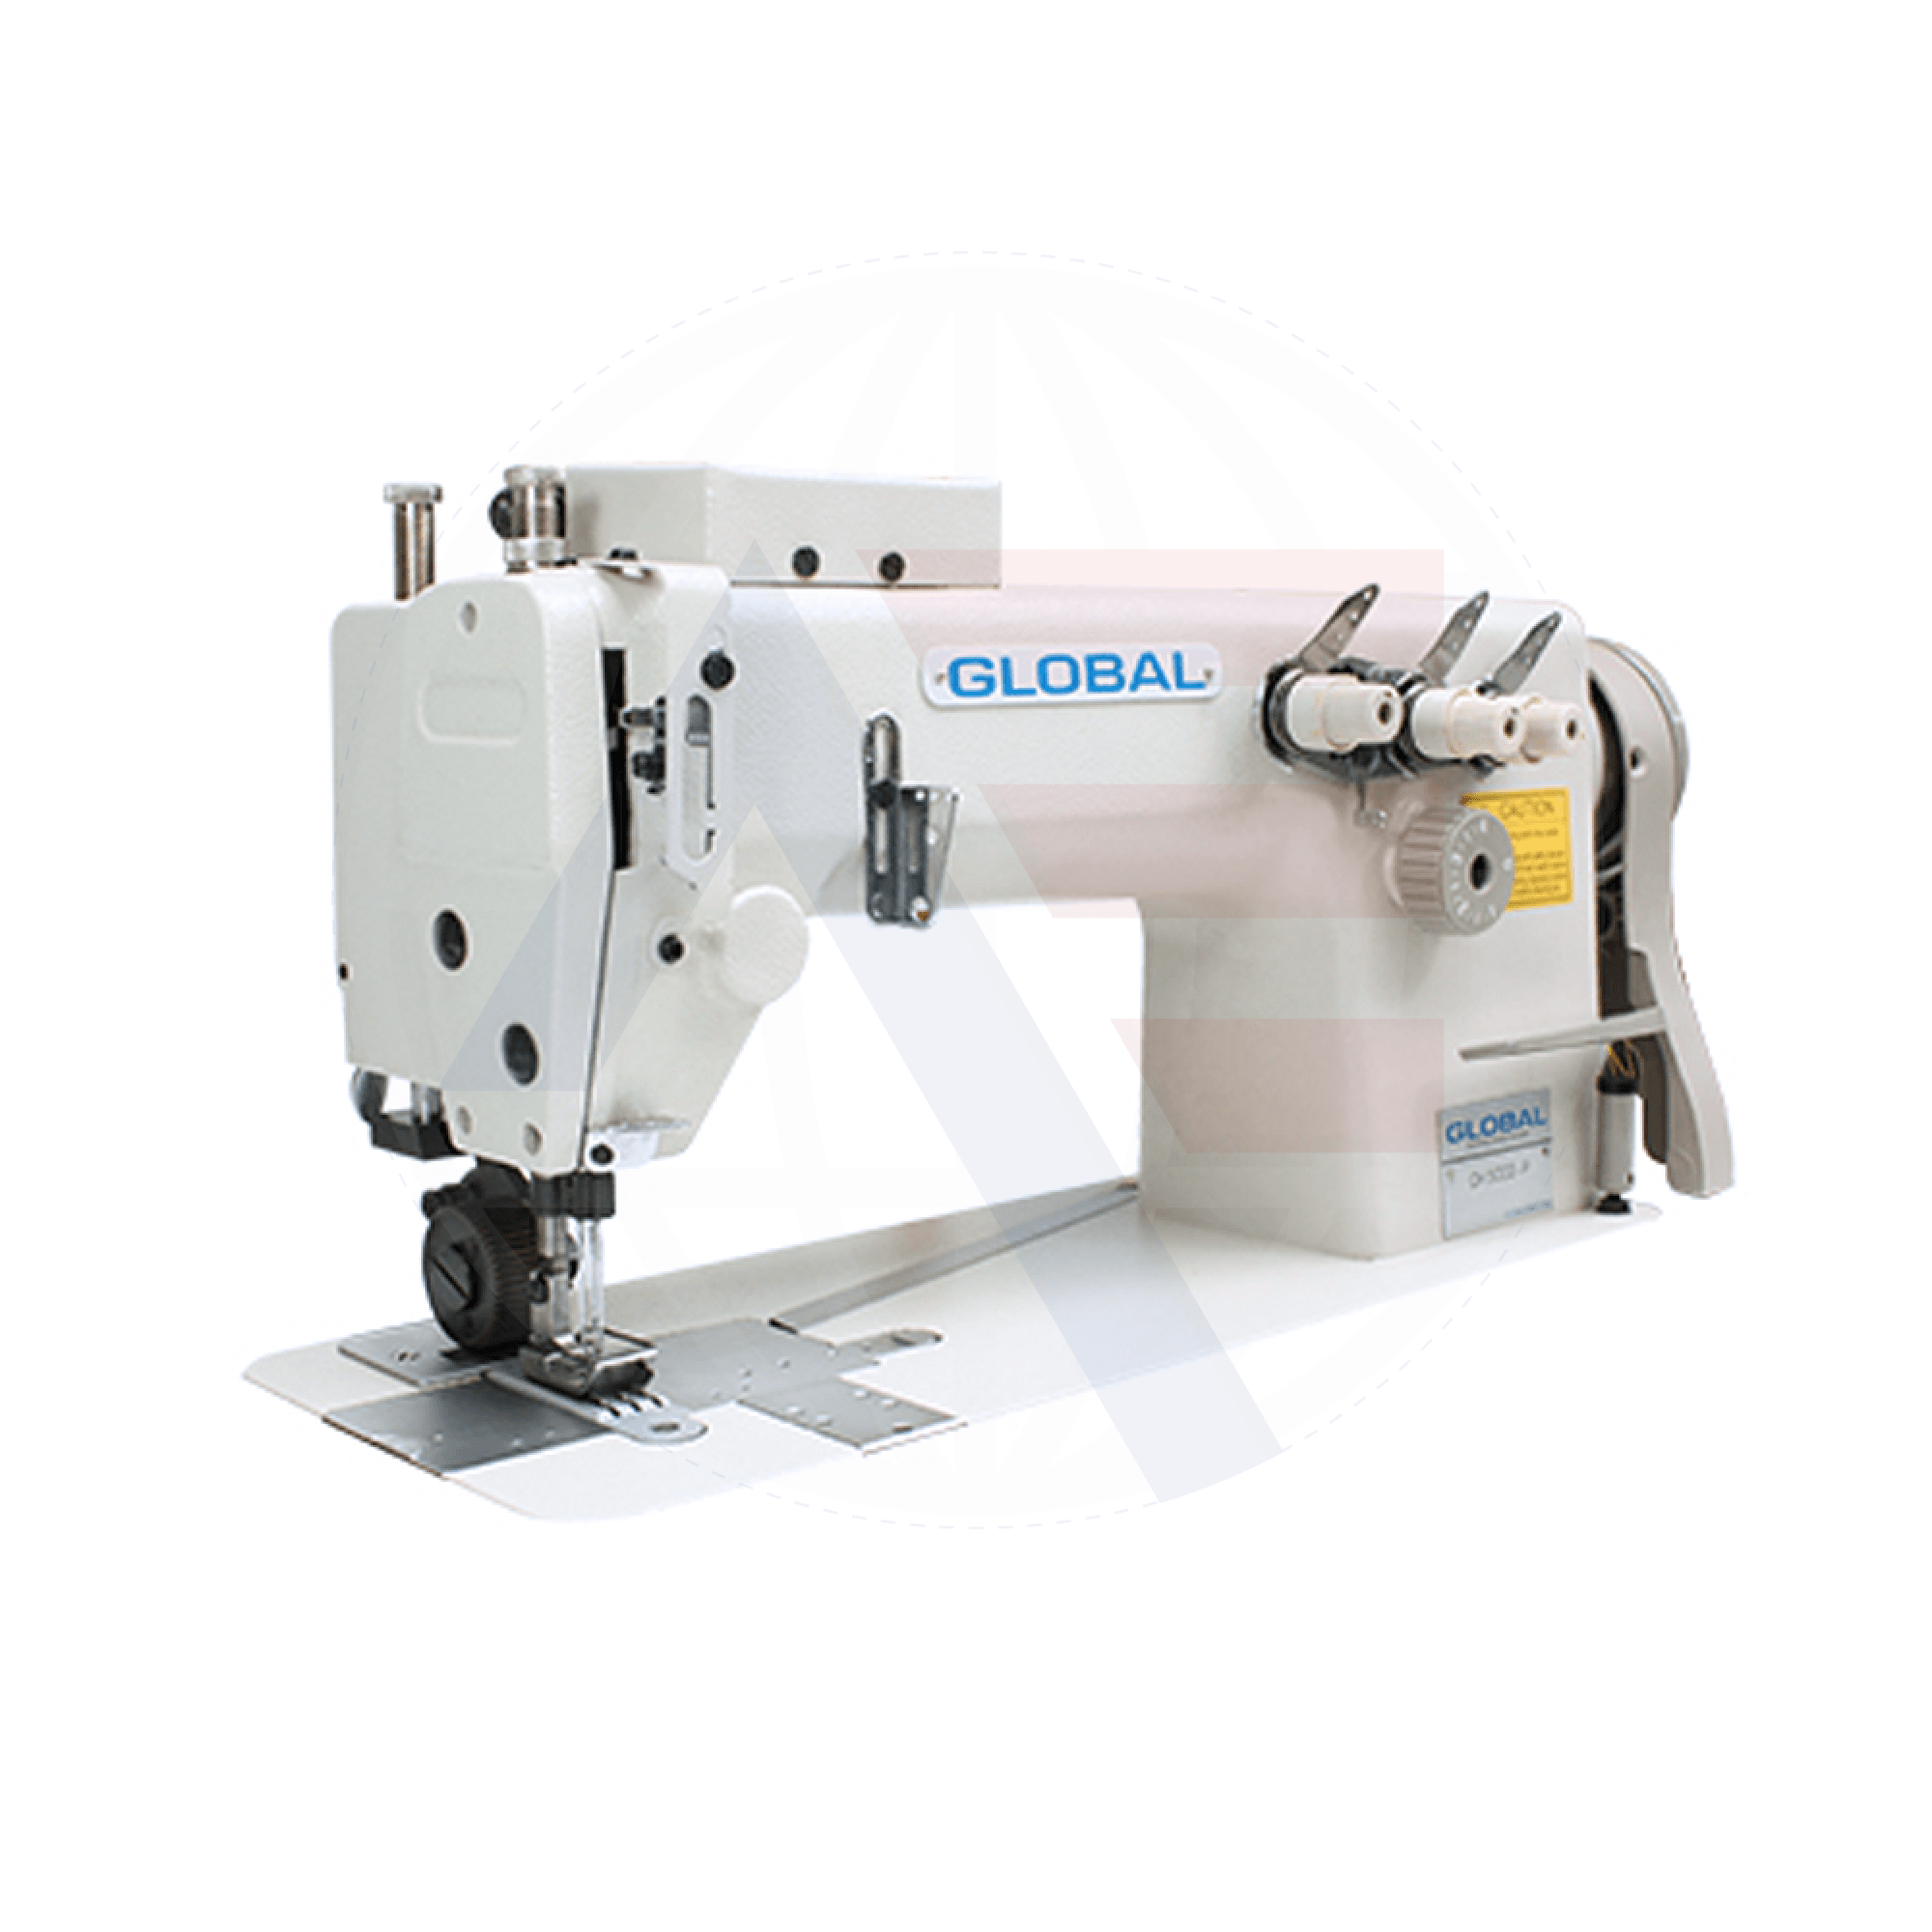 Global Ch 5000 Series Chainstitch Machine Sewing Machines